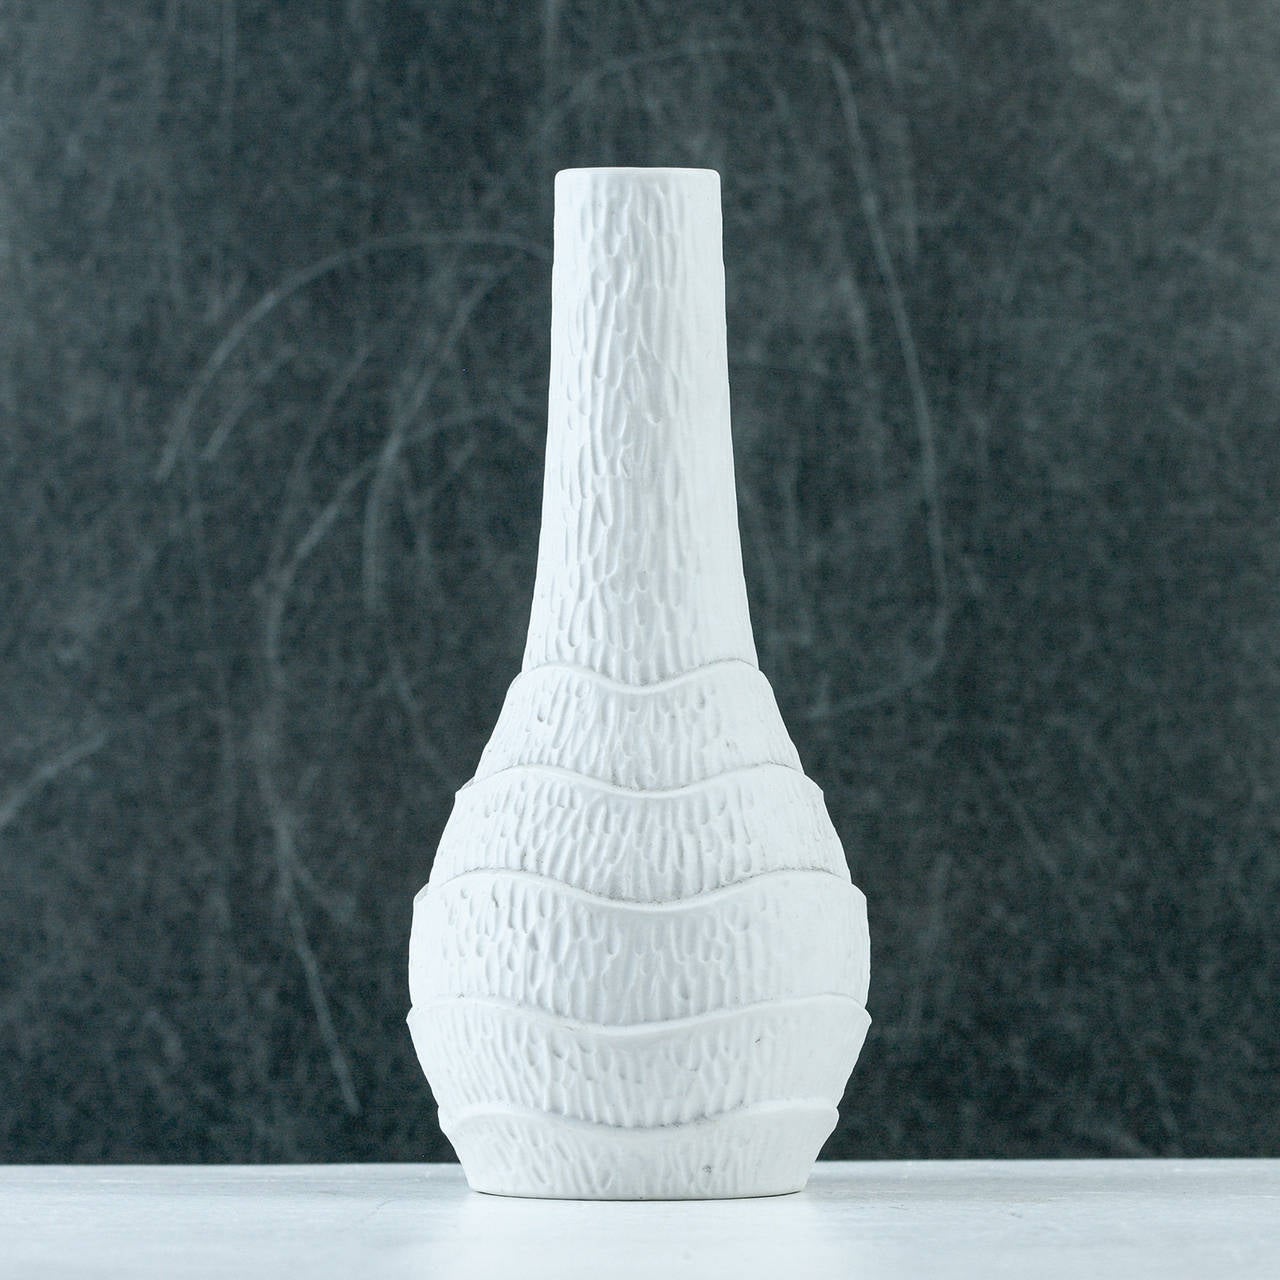 wonderful pure white bisque porcelain, organic op-art Vase by German manufacturer Schumann/Arzberg Bavaria, Model No. 1116/18, signed